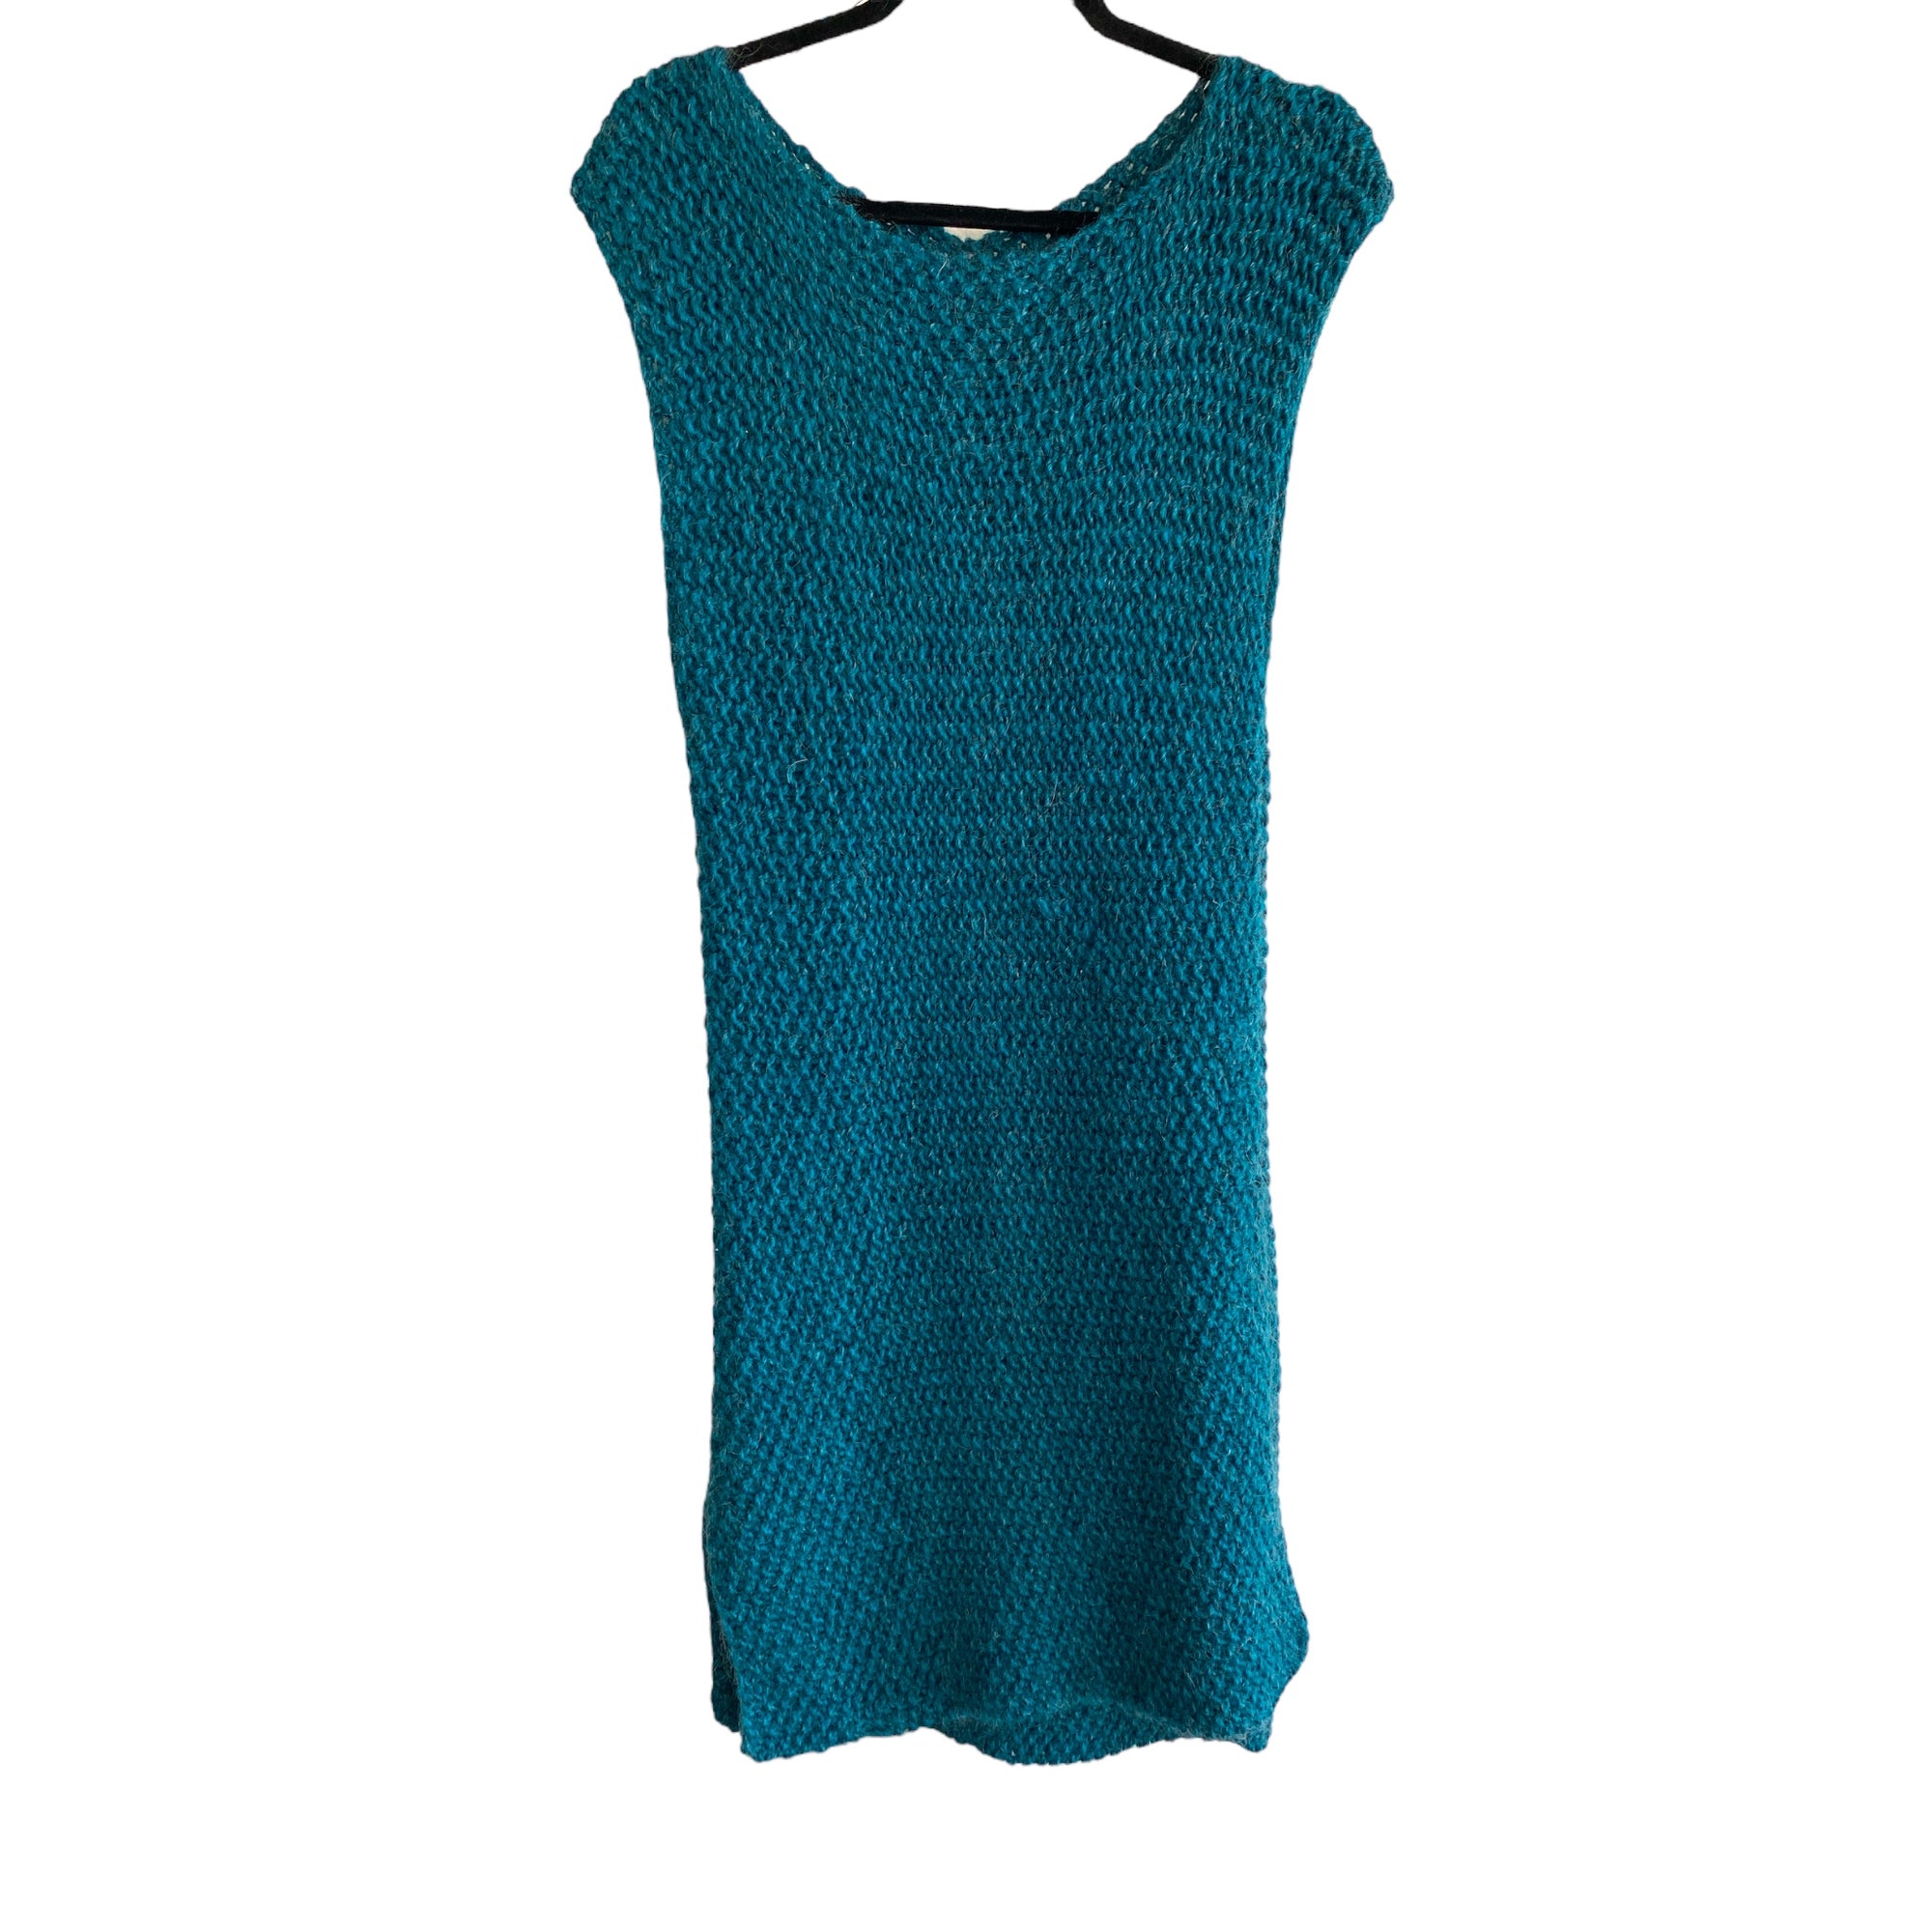 Aquamarine Hand Knit Sheath Dress